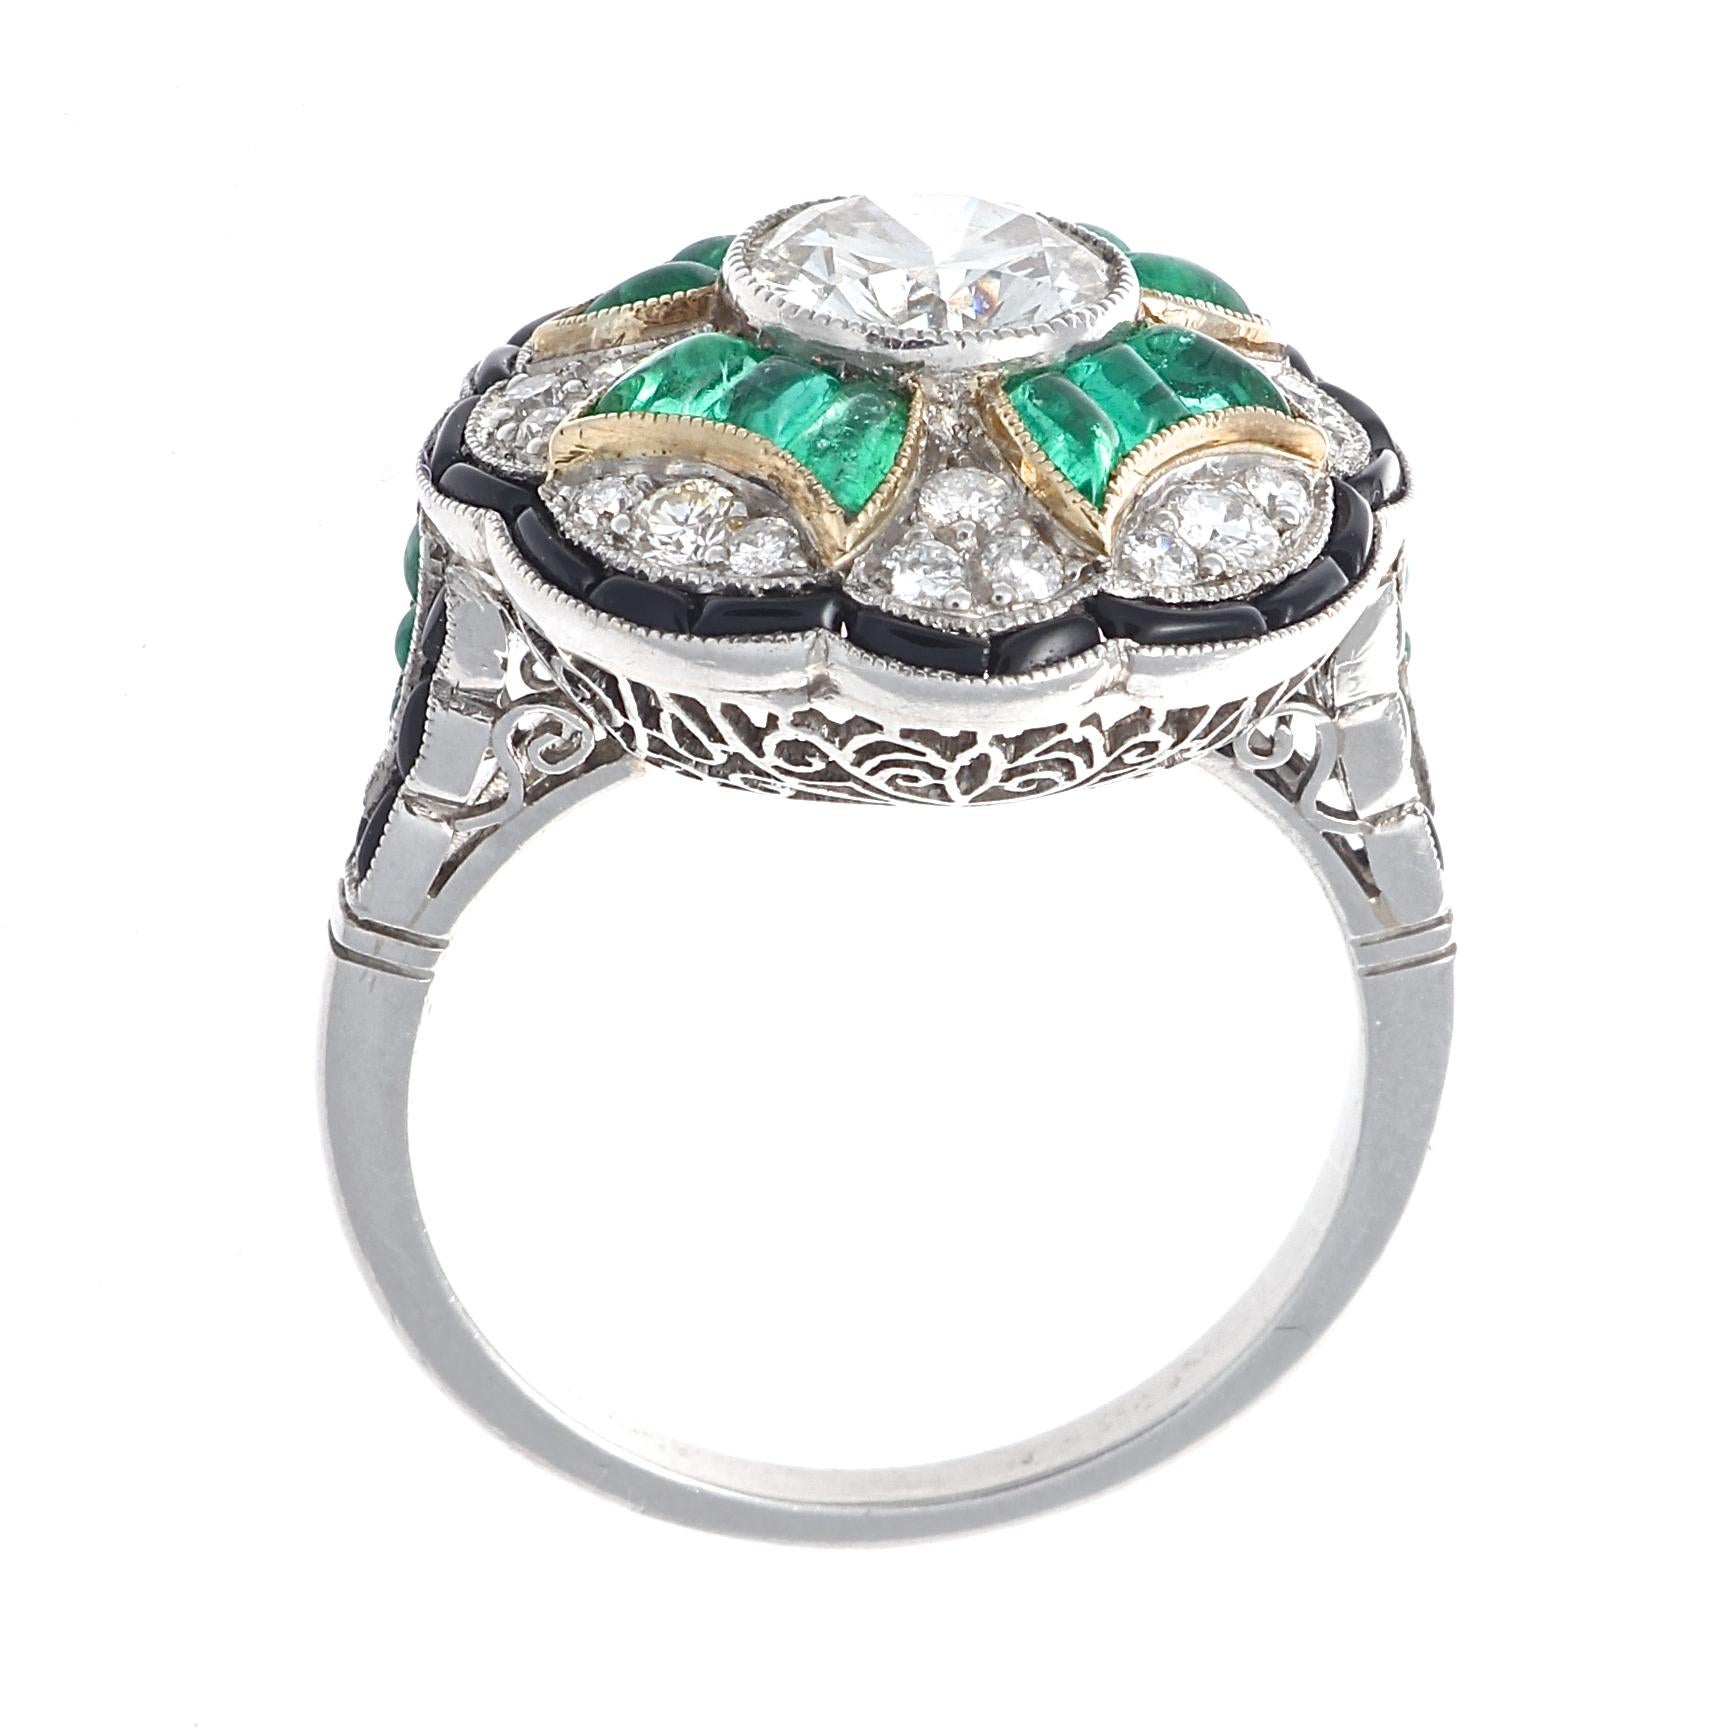 Old European Cut Art Deco Style 1.12 Carat Diamond Emerald Onyx Platinum Cocktail Ring